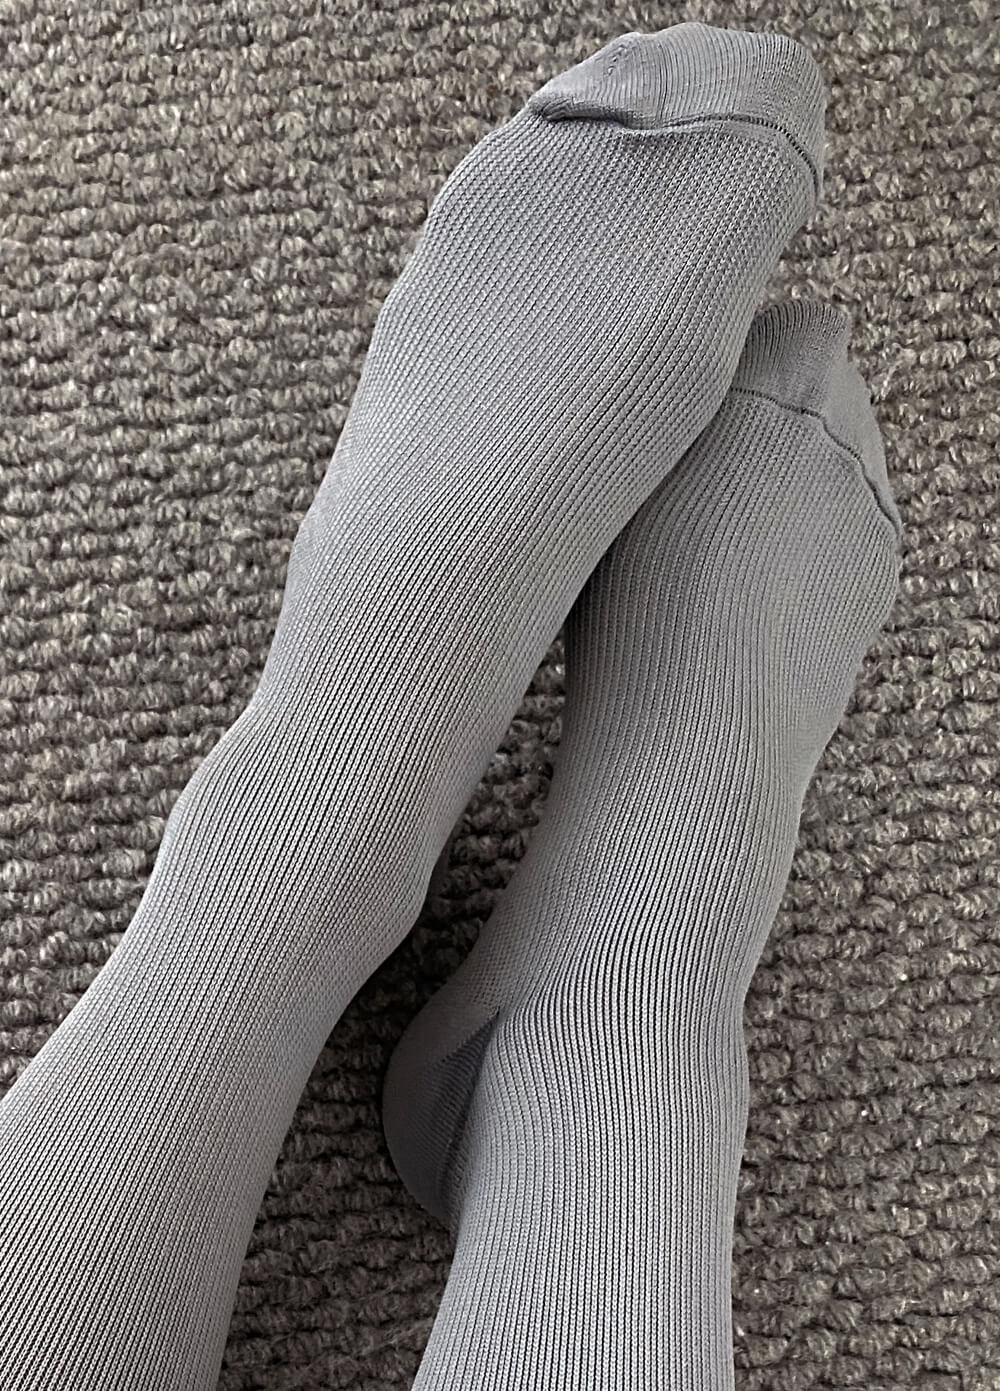 Mama Sox - Renew Maternity Compression Socks in Charcoal